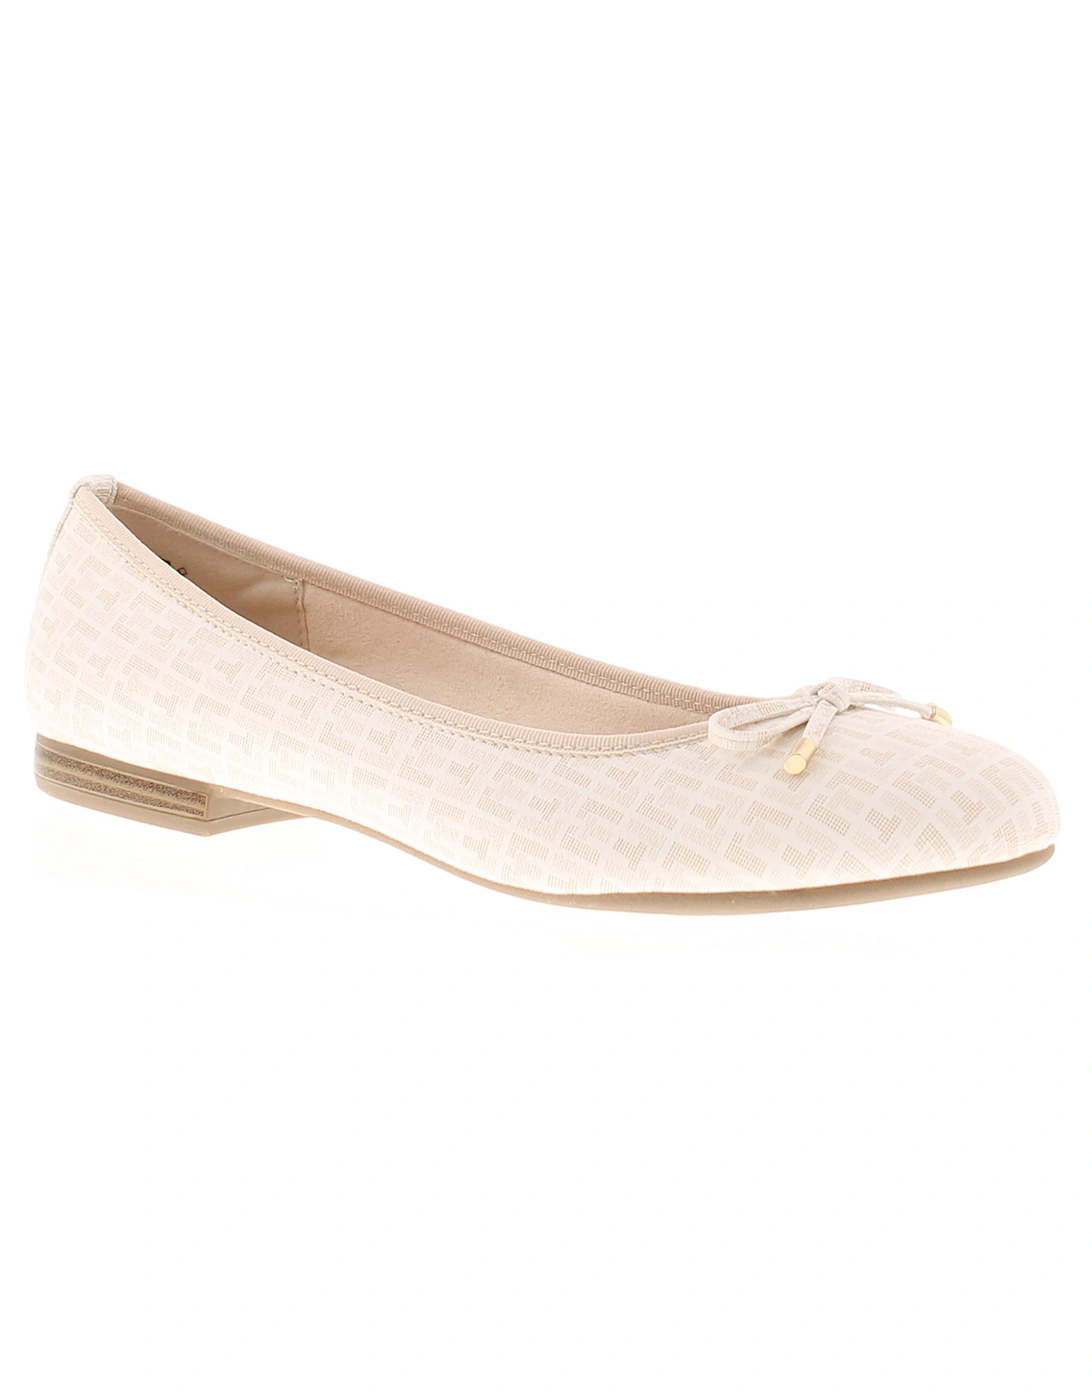 Womens Shoes Flats Ballerina Milana Slip On white UK Size, 6 of 5